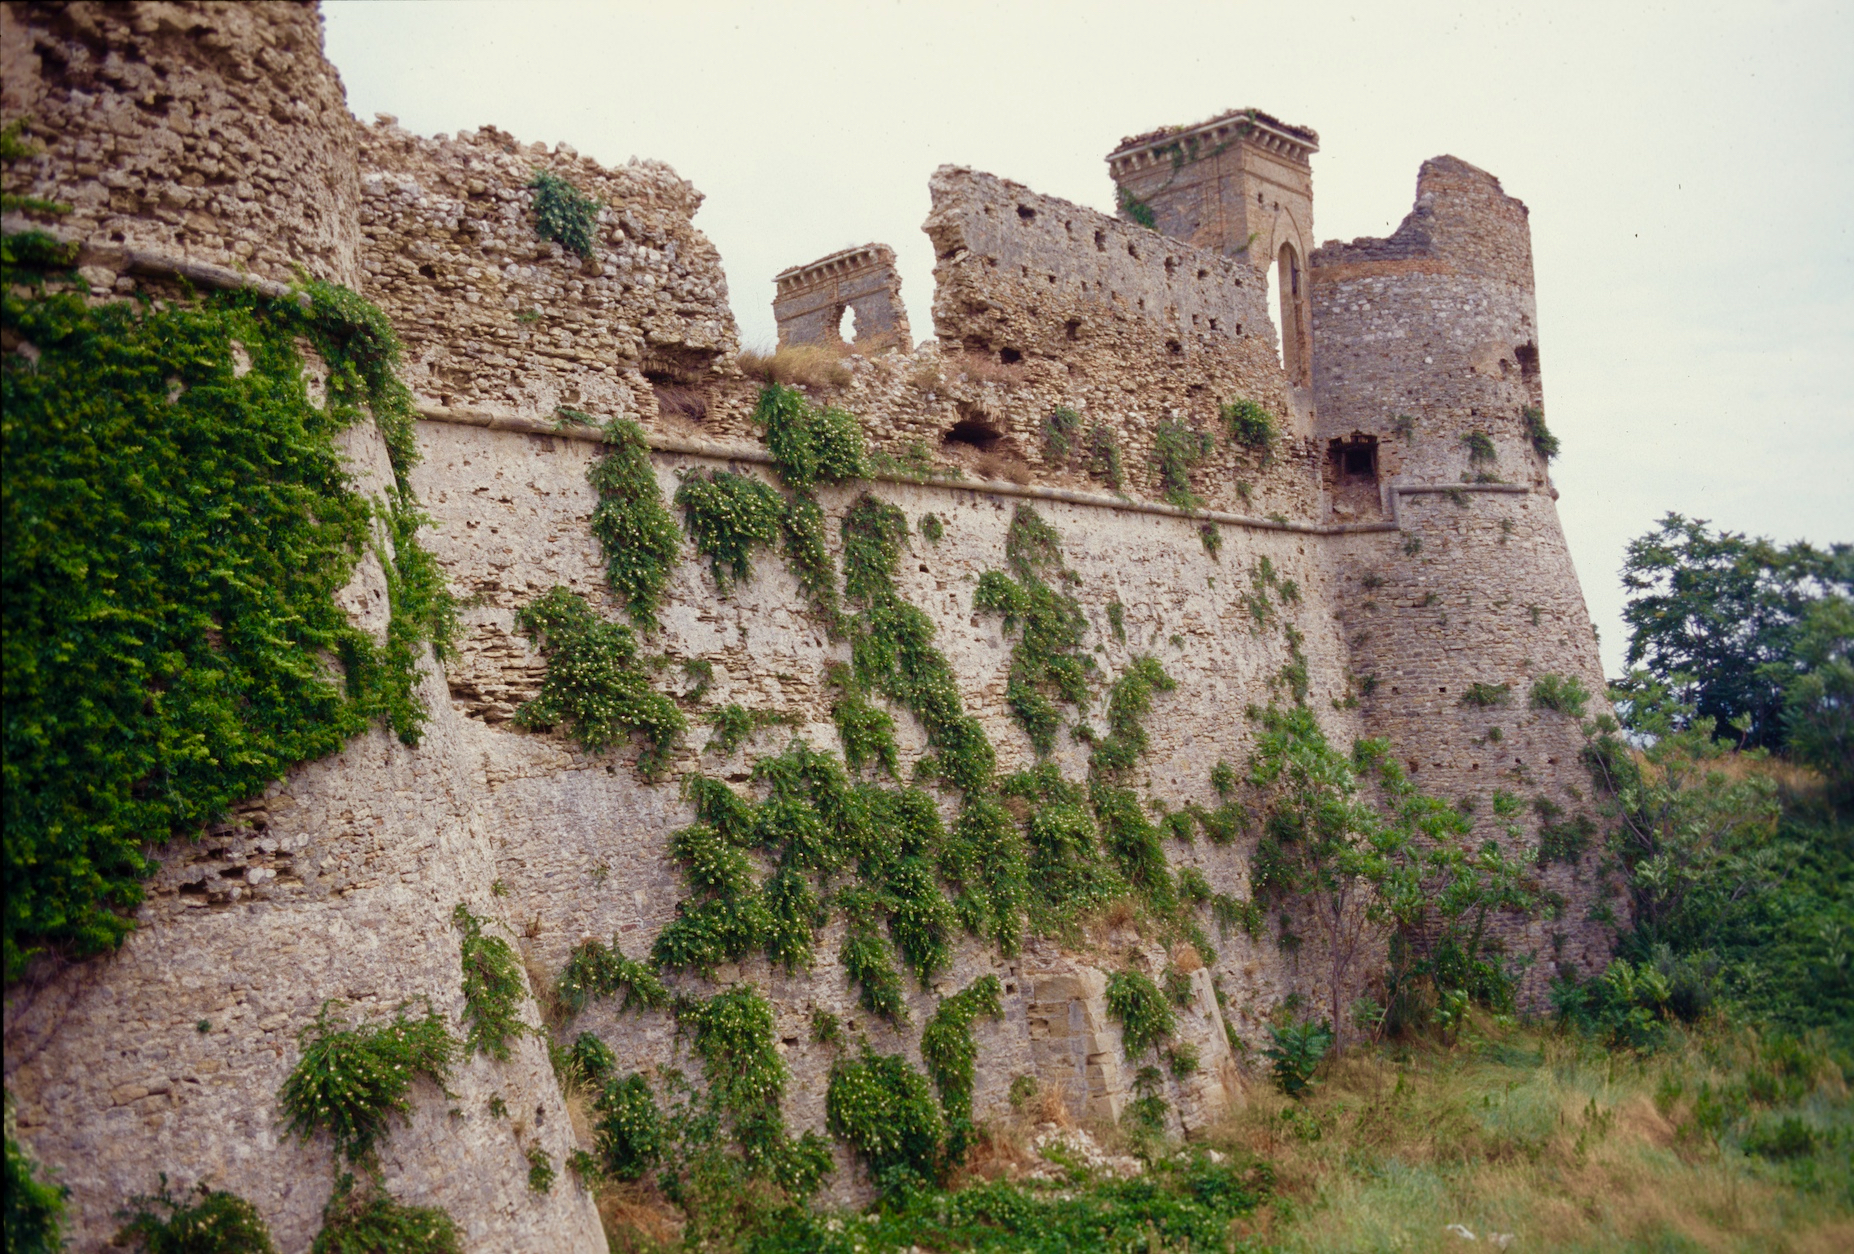 I love castles anywhere. Castello Aragonese in Ortona, Italy, 1996, overlooking the Adriatic Sea.